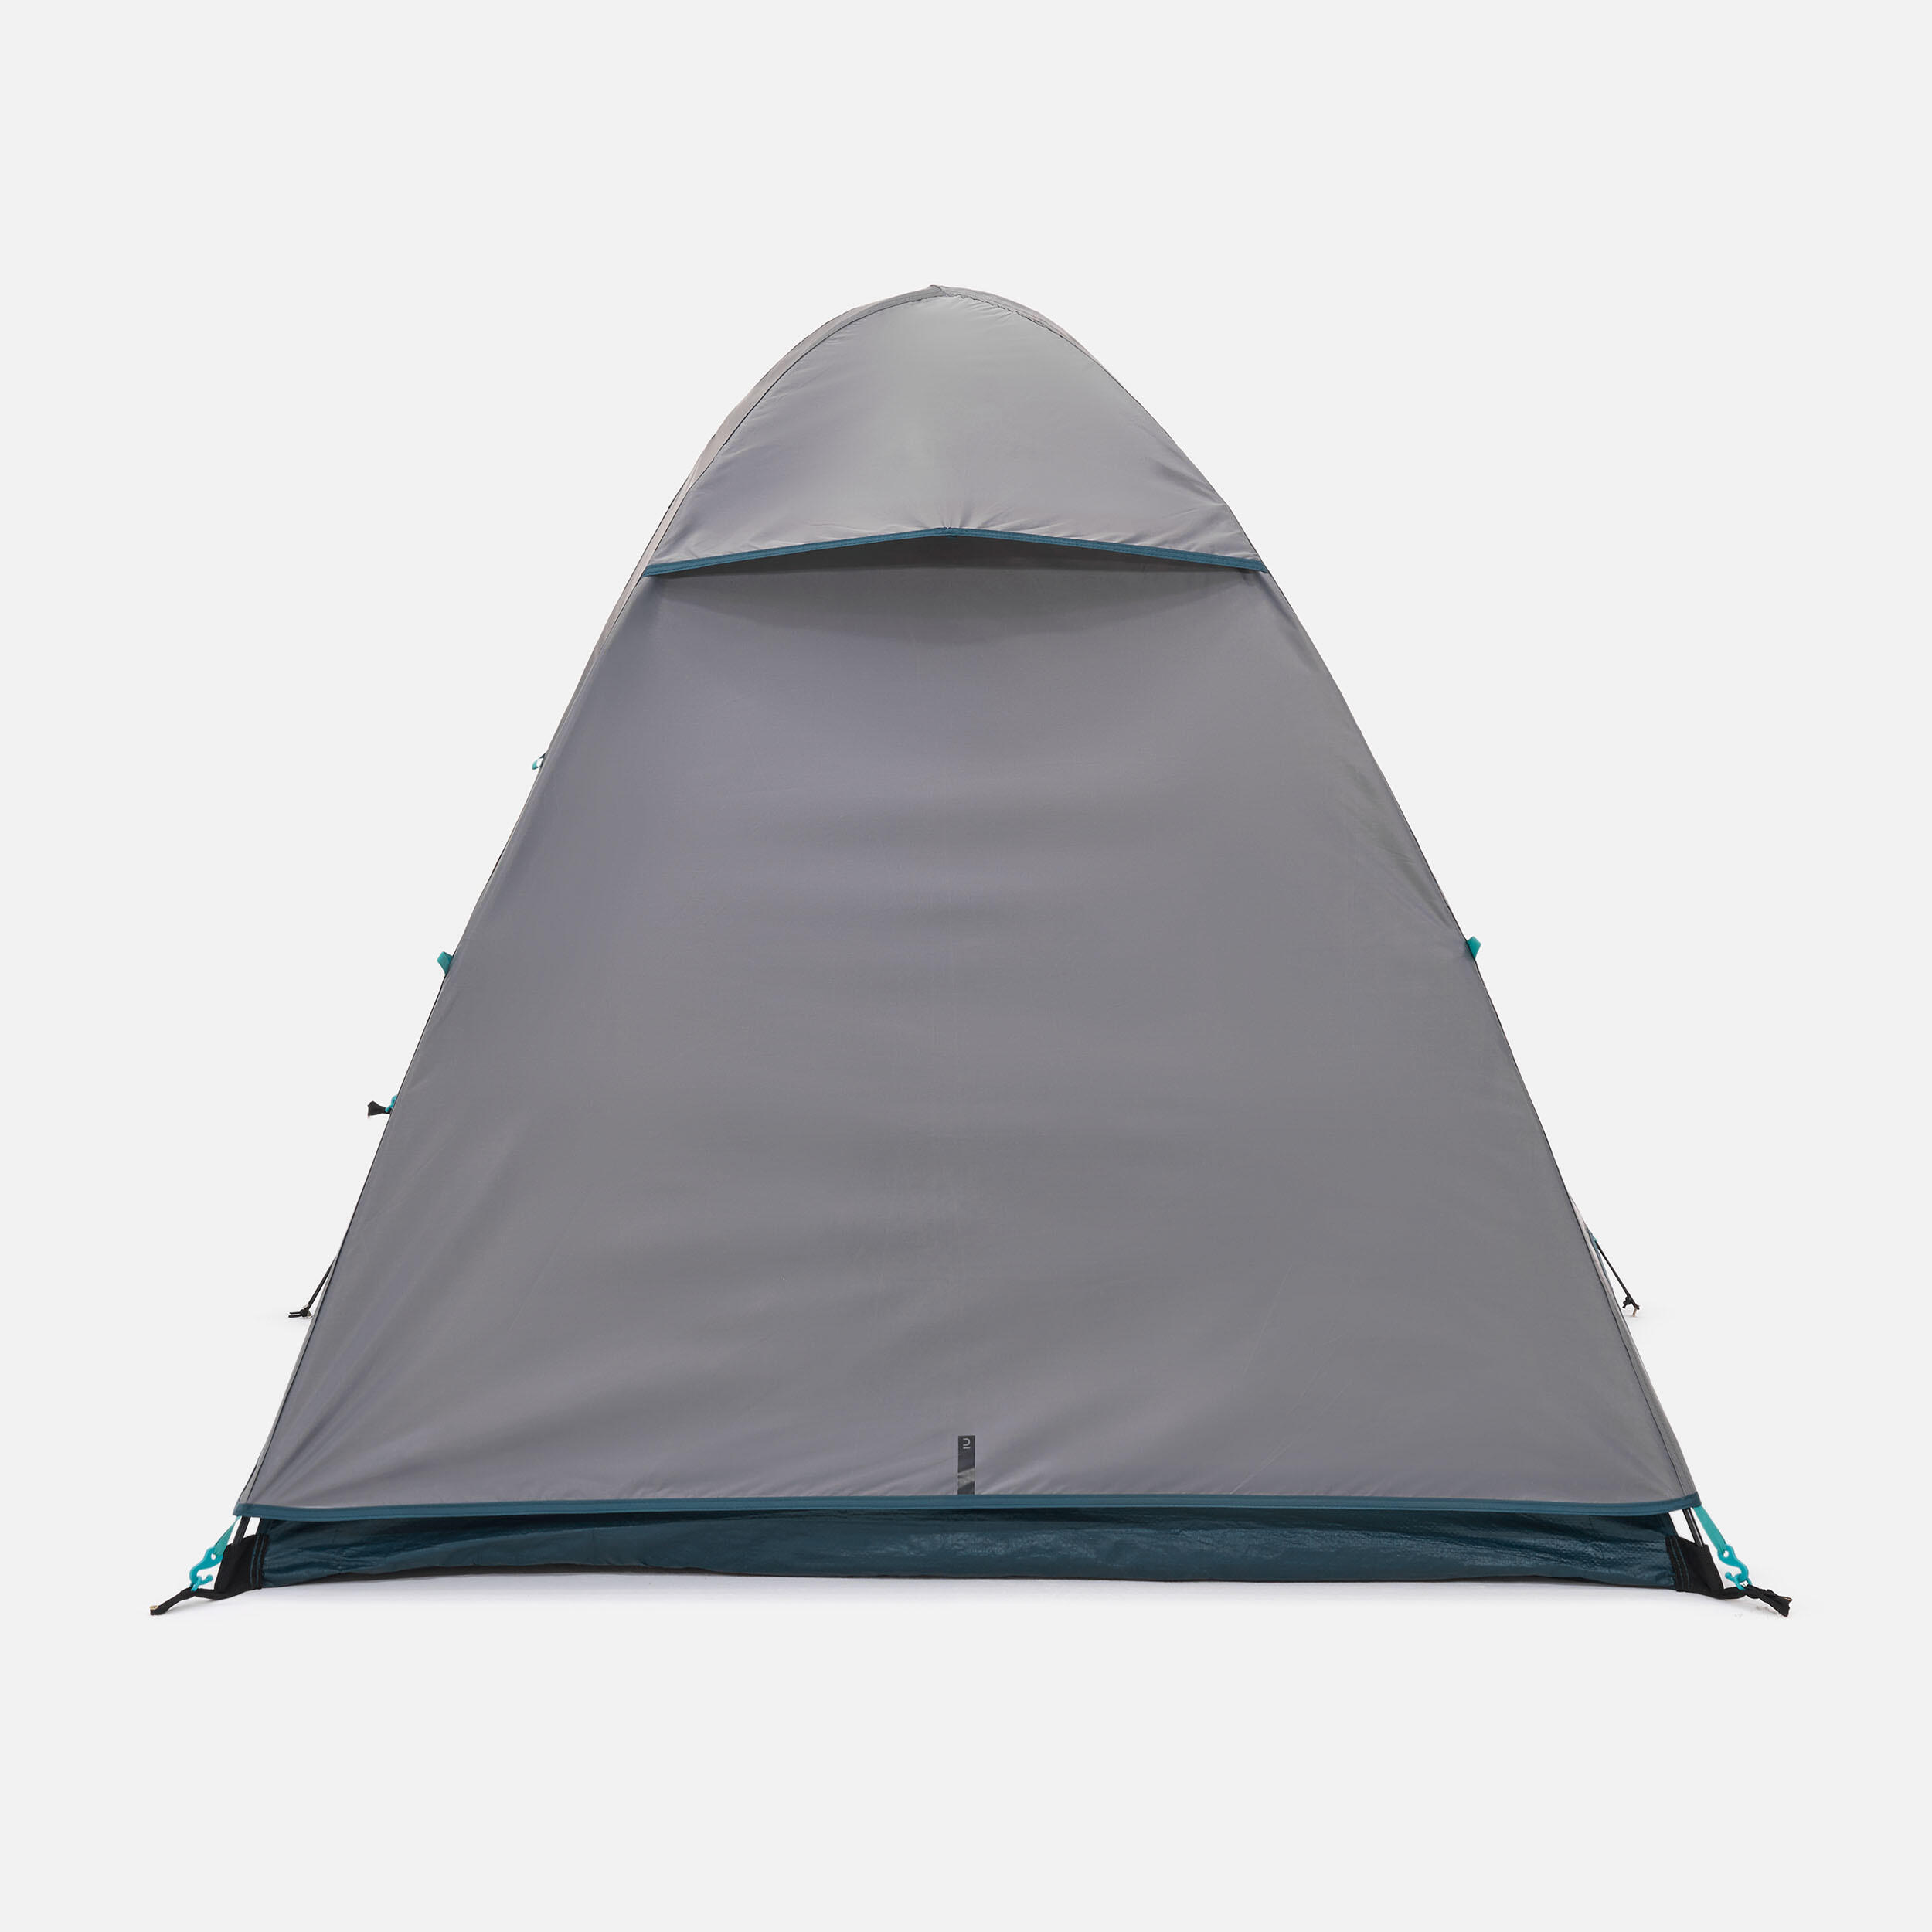 2 Man Tent - MH100 8/21